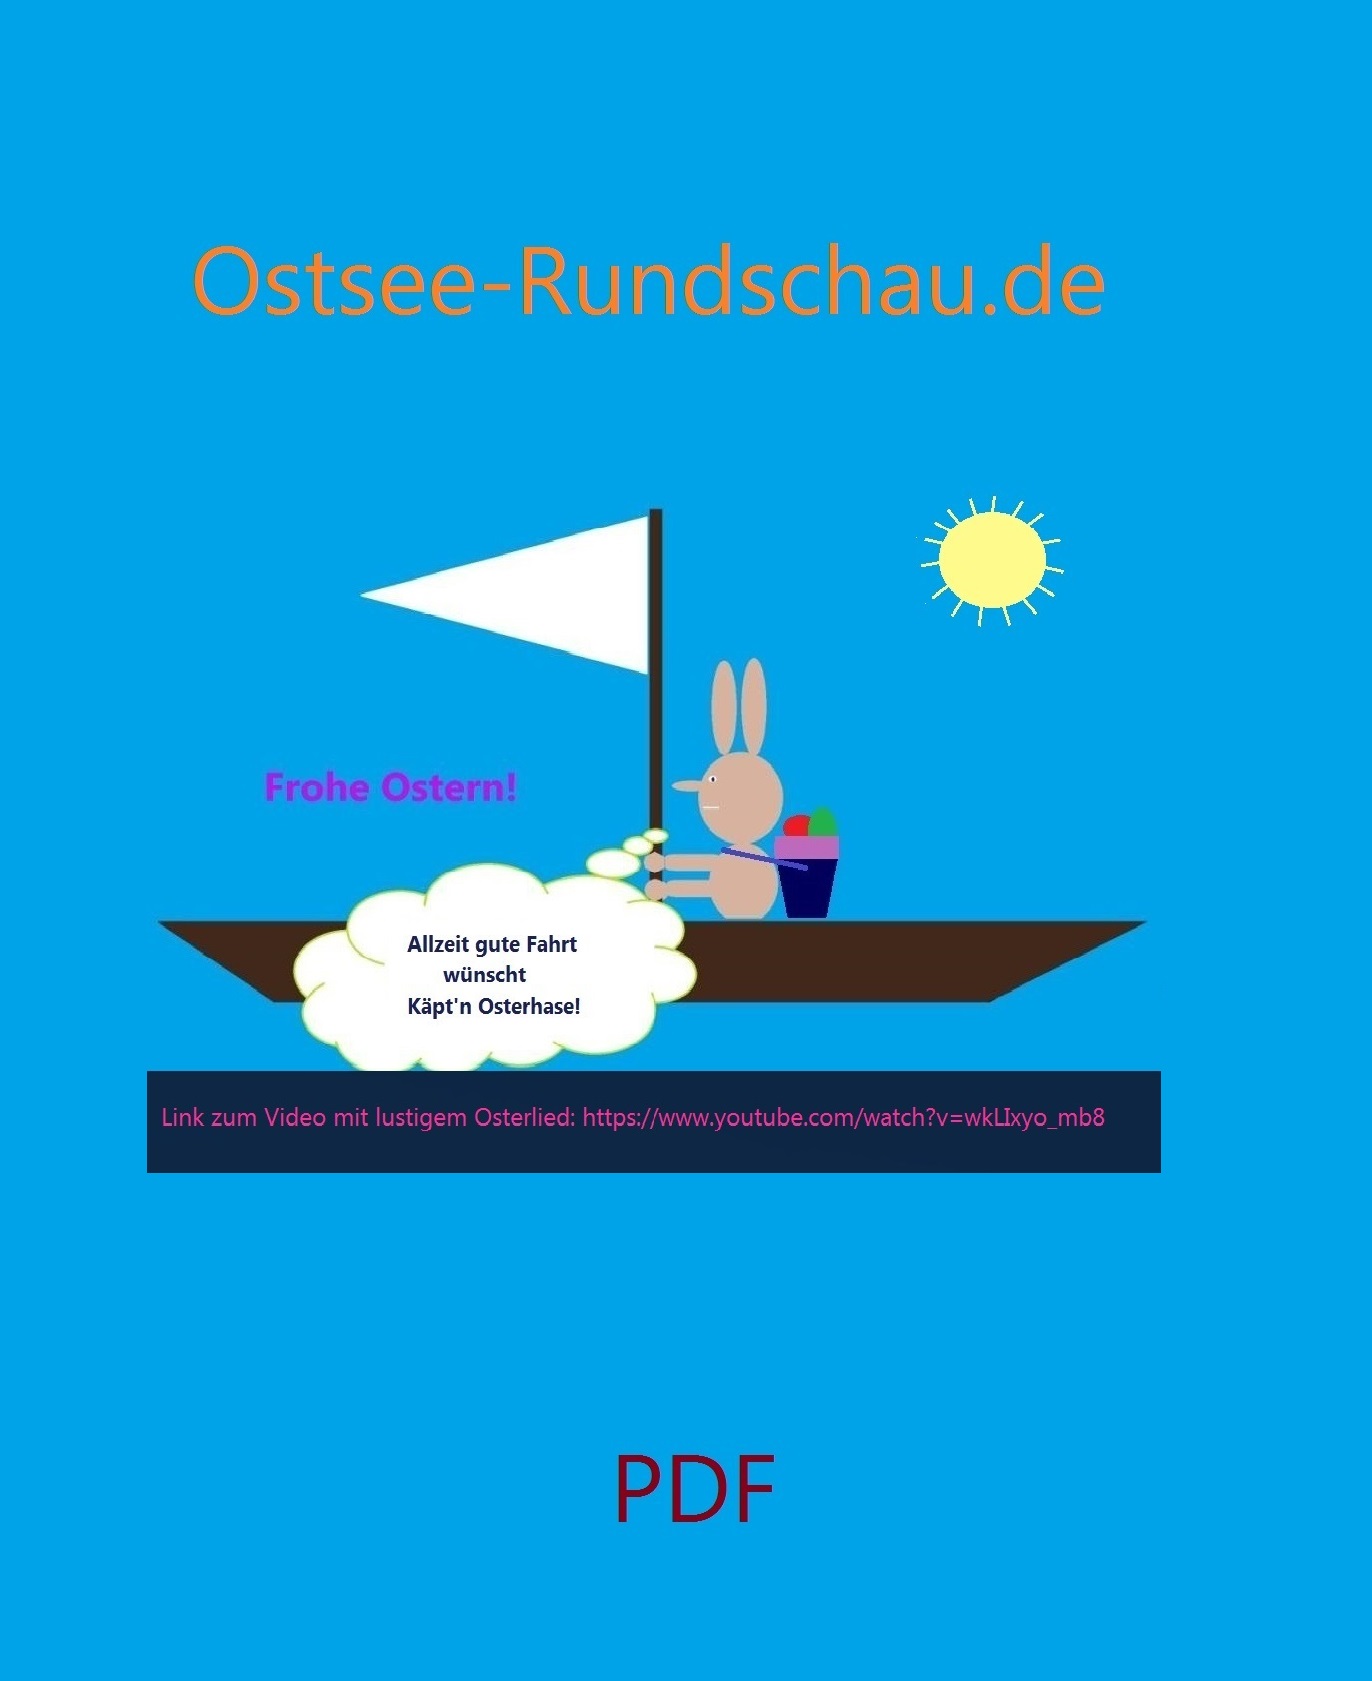 Frohe Ostern wünscht Ostsee-Rundschau.de - PDF  - Link zum Video mit lustigem Osterlied: https://www.youtube.com/watch?v=wkLIxyo_mb8